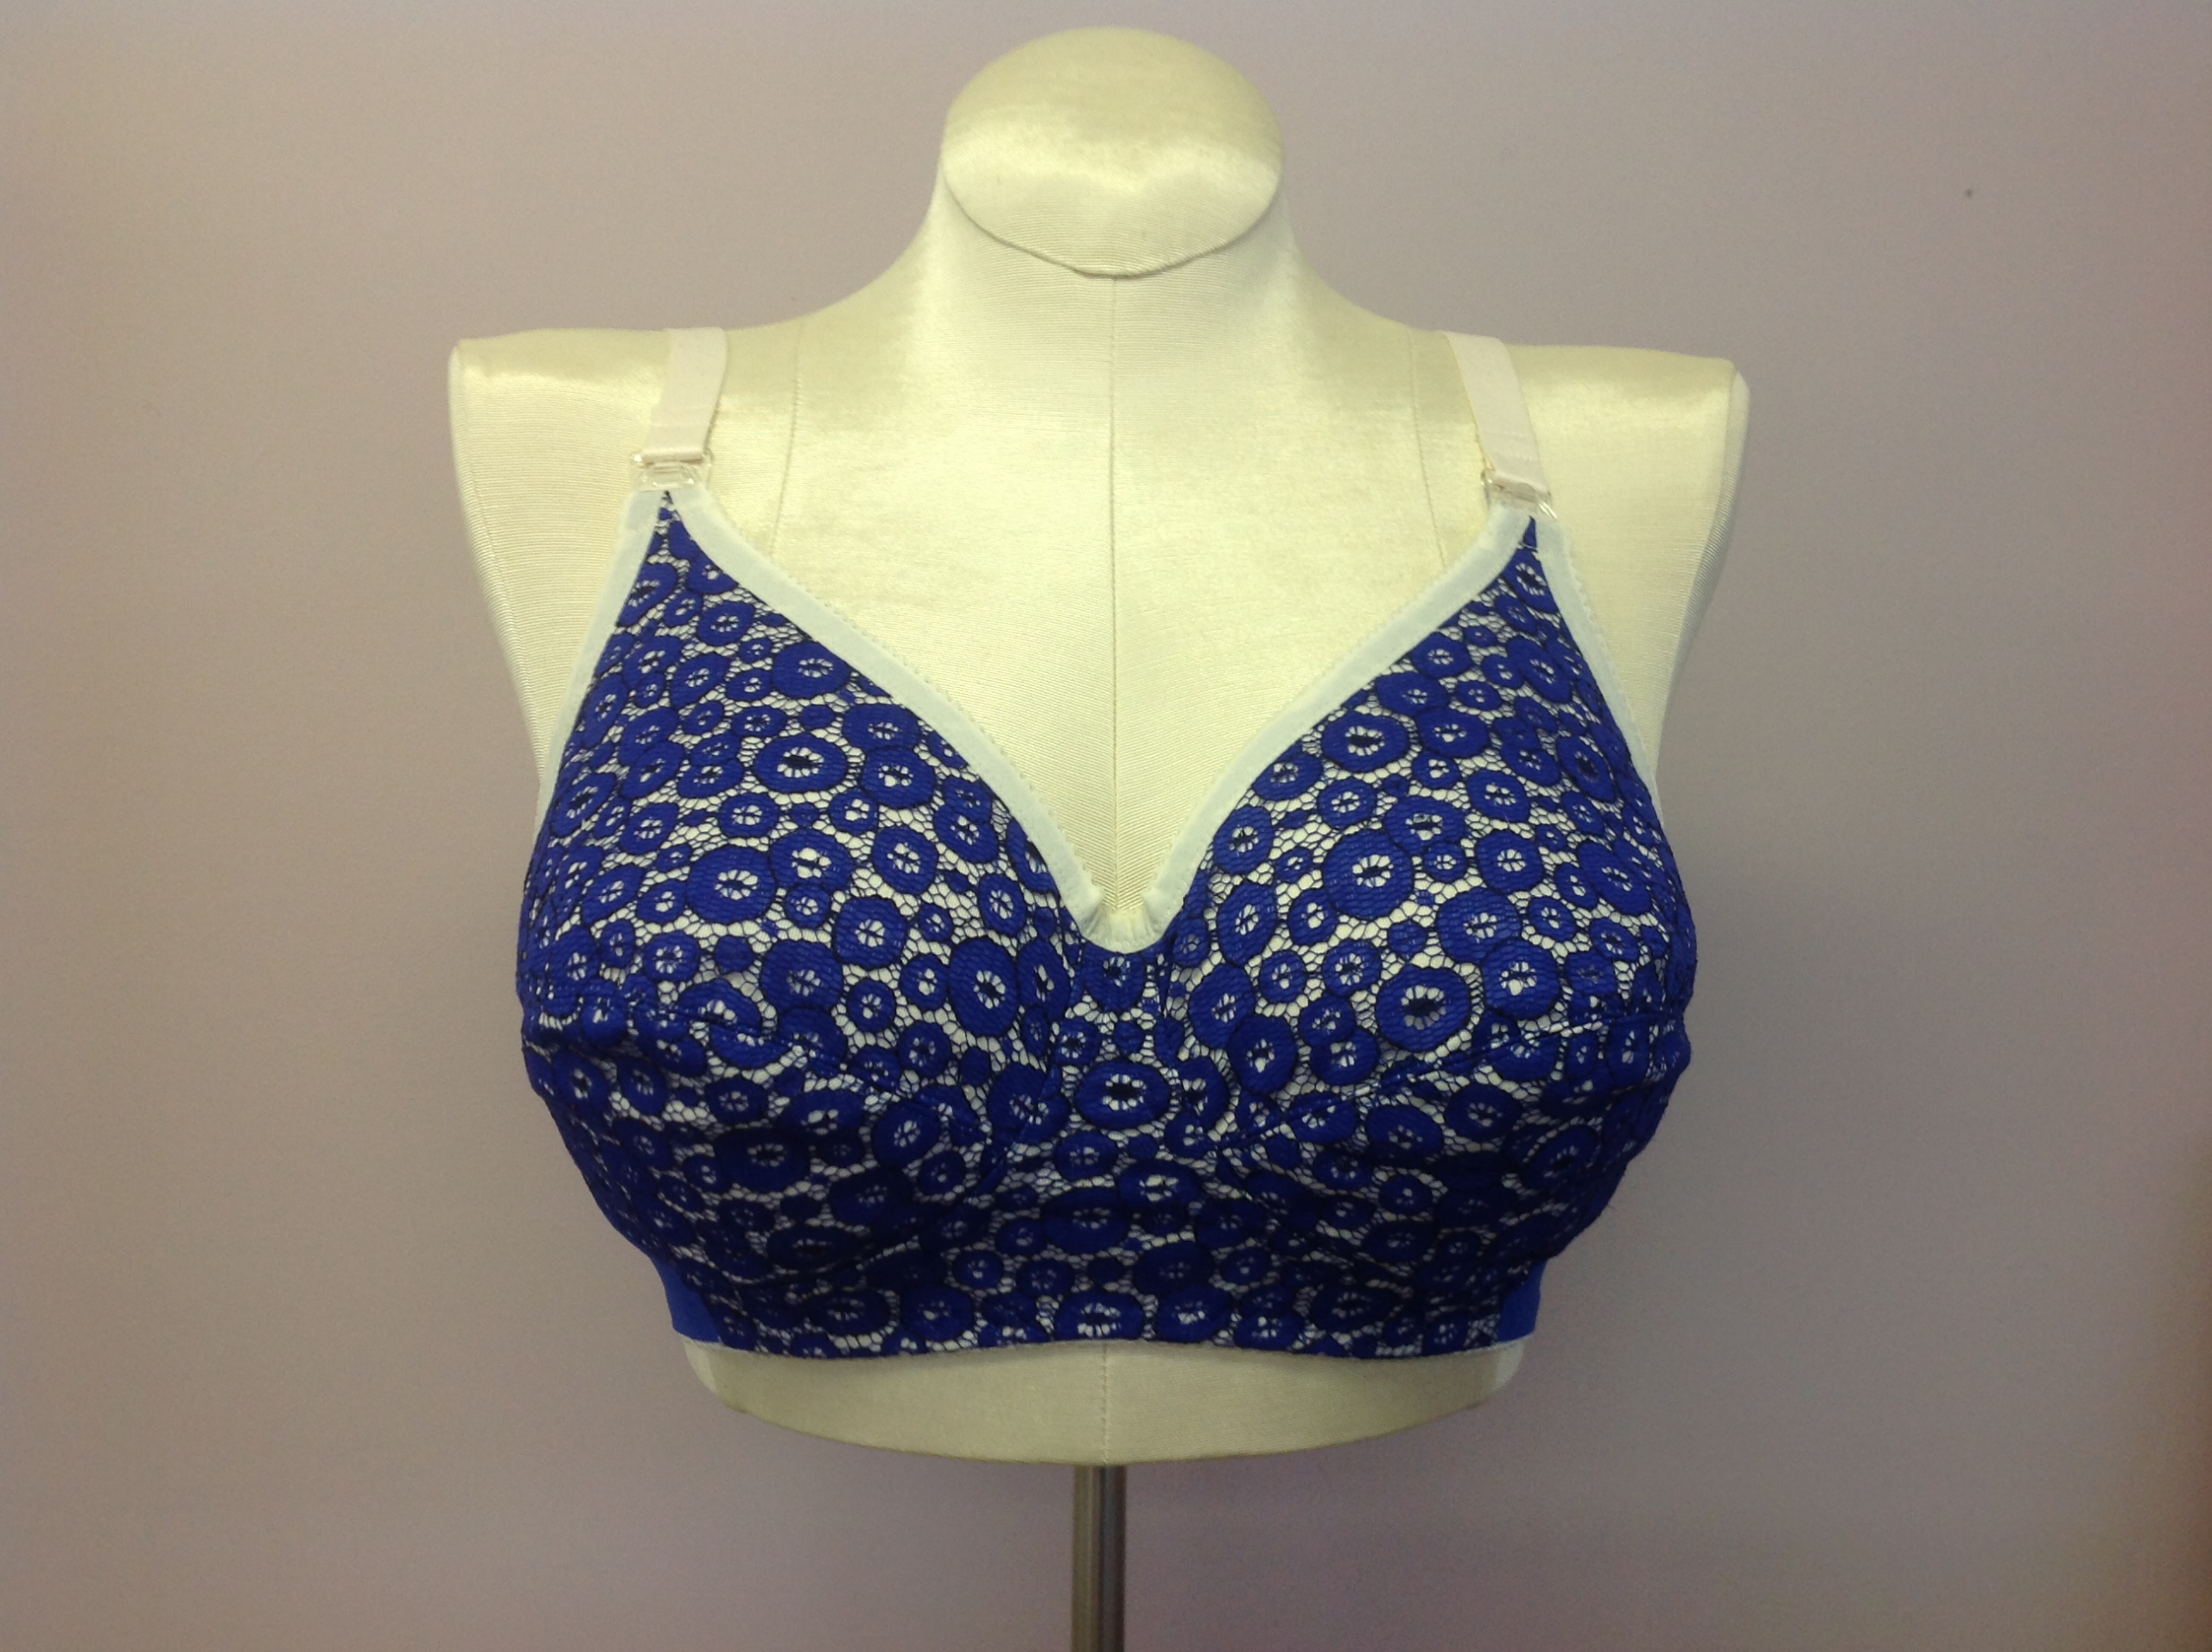 How to Sew the Ezi-sew Nursing Bra - Bra-makers Supply for all things bra